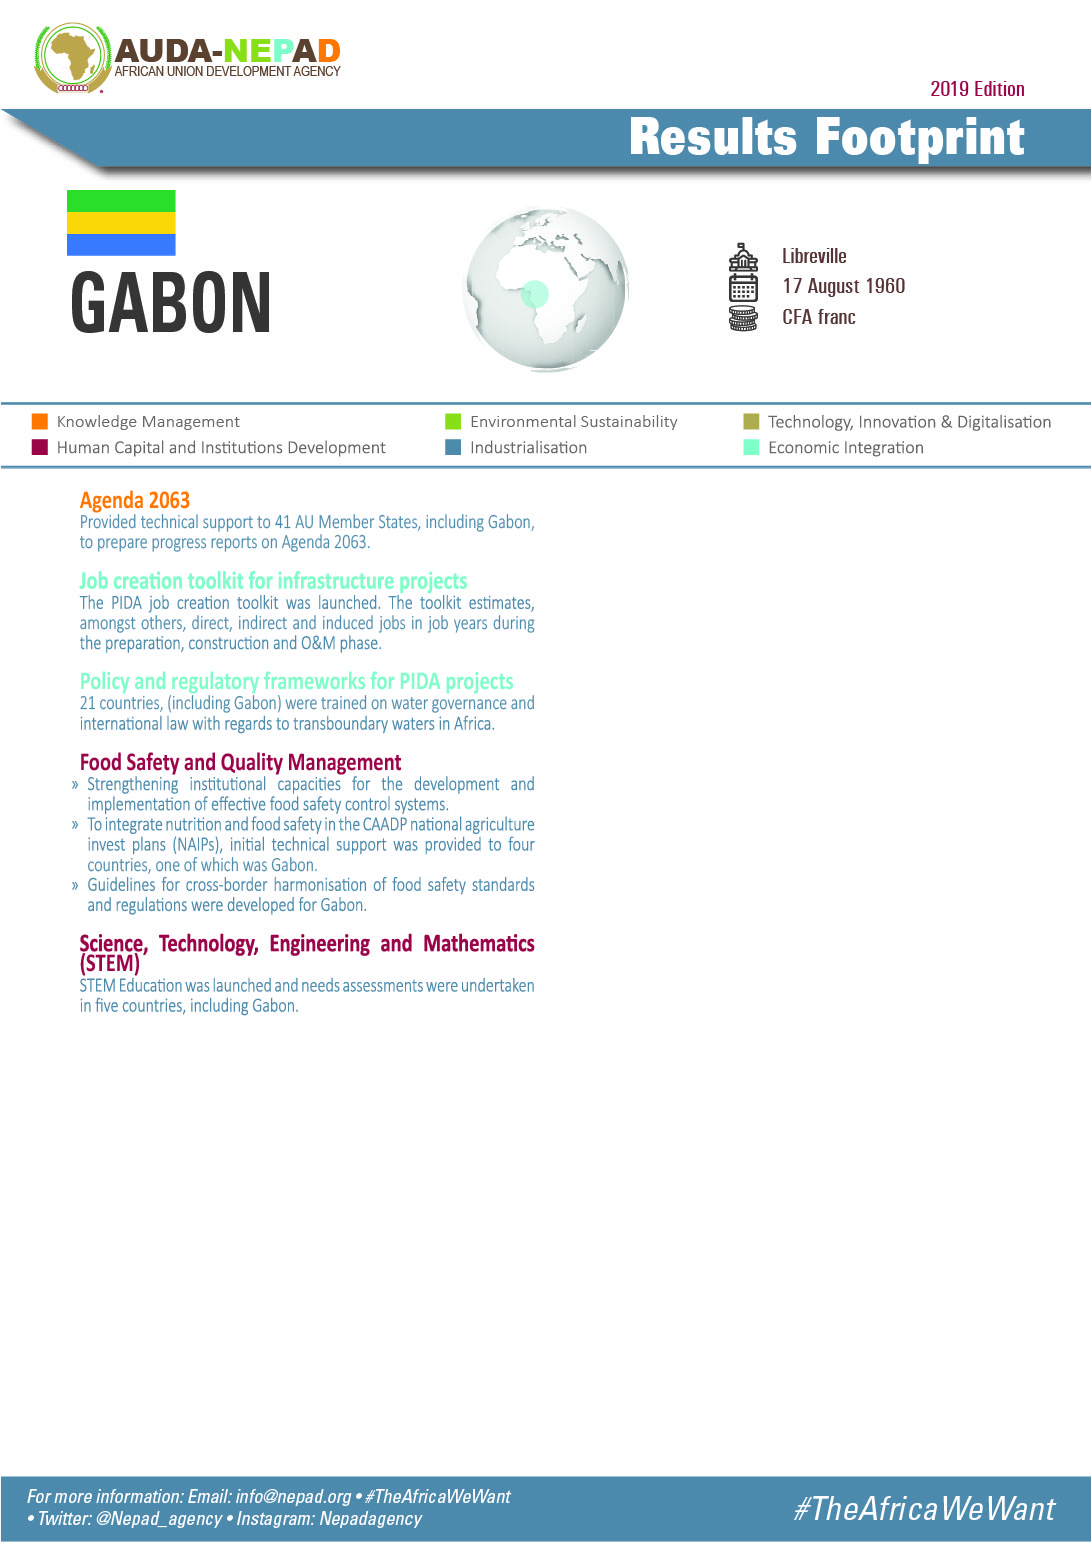 2019 AUDA-NEPAD Footprint: Country Profiles: Gabon